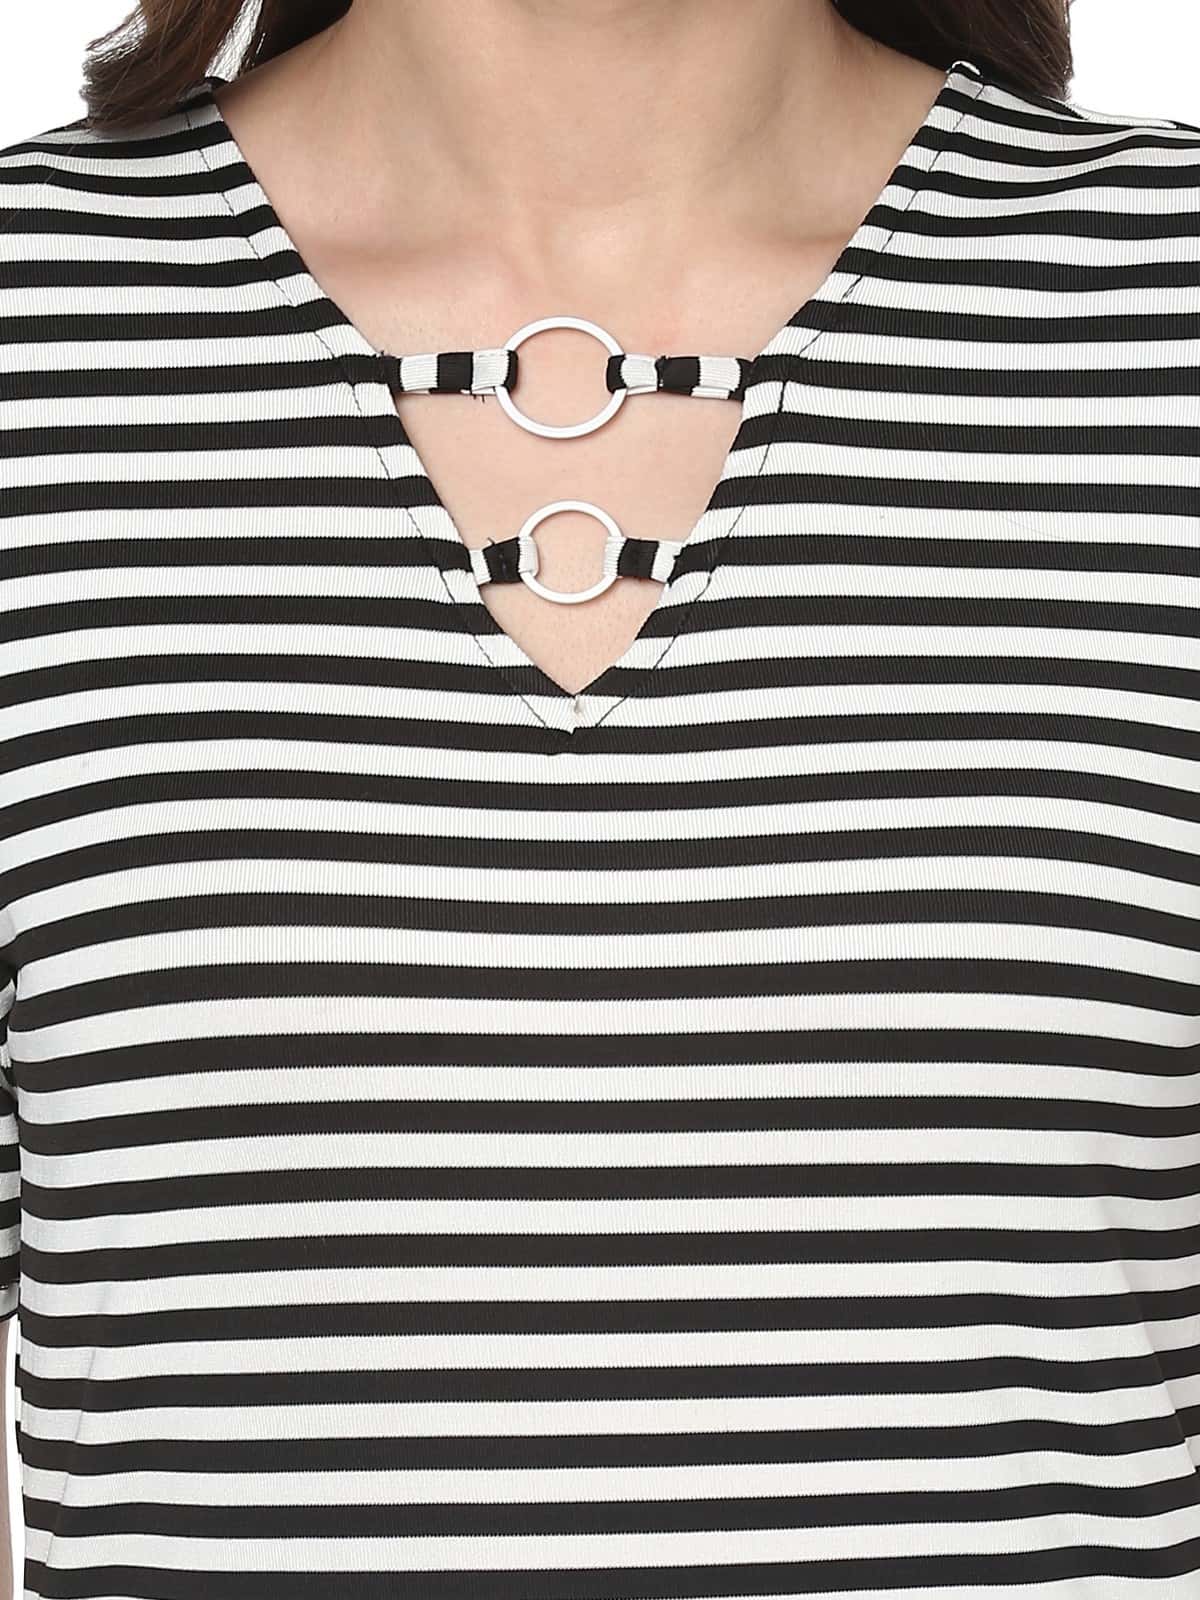 Women's Breton Stripe Top With Rings - Pannkh